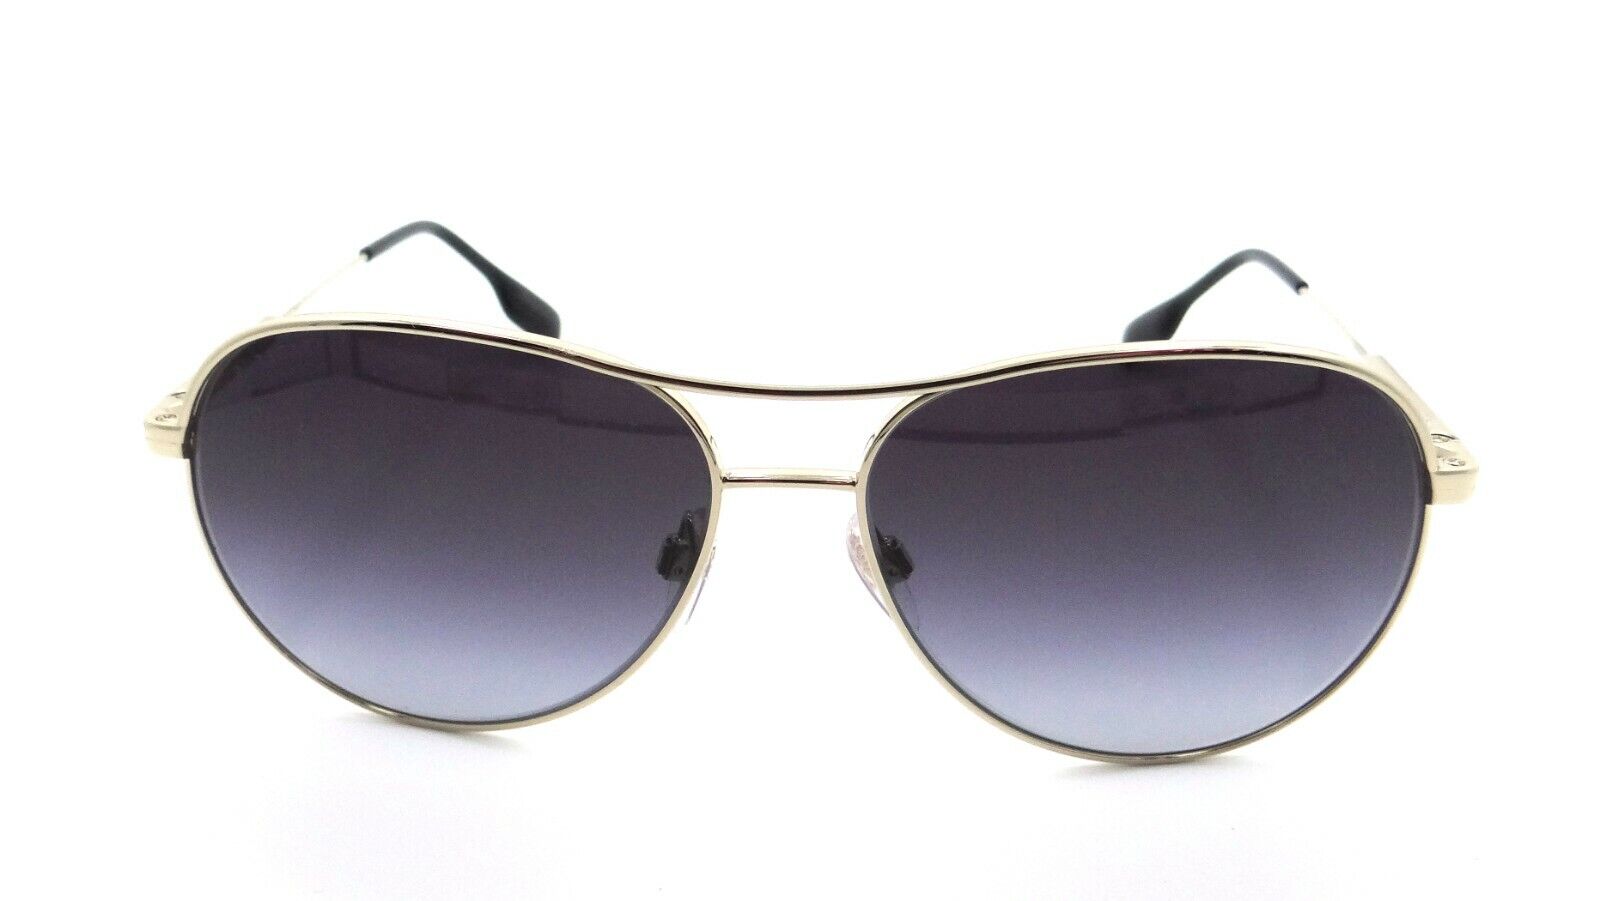 Burberry Sunglasses BE 3122 1109/8G 59-14-140 Light Gold / Grey Gradient Italy-8056597344593-classypw.com-1